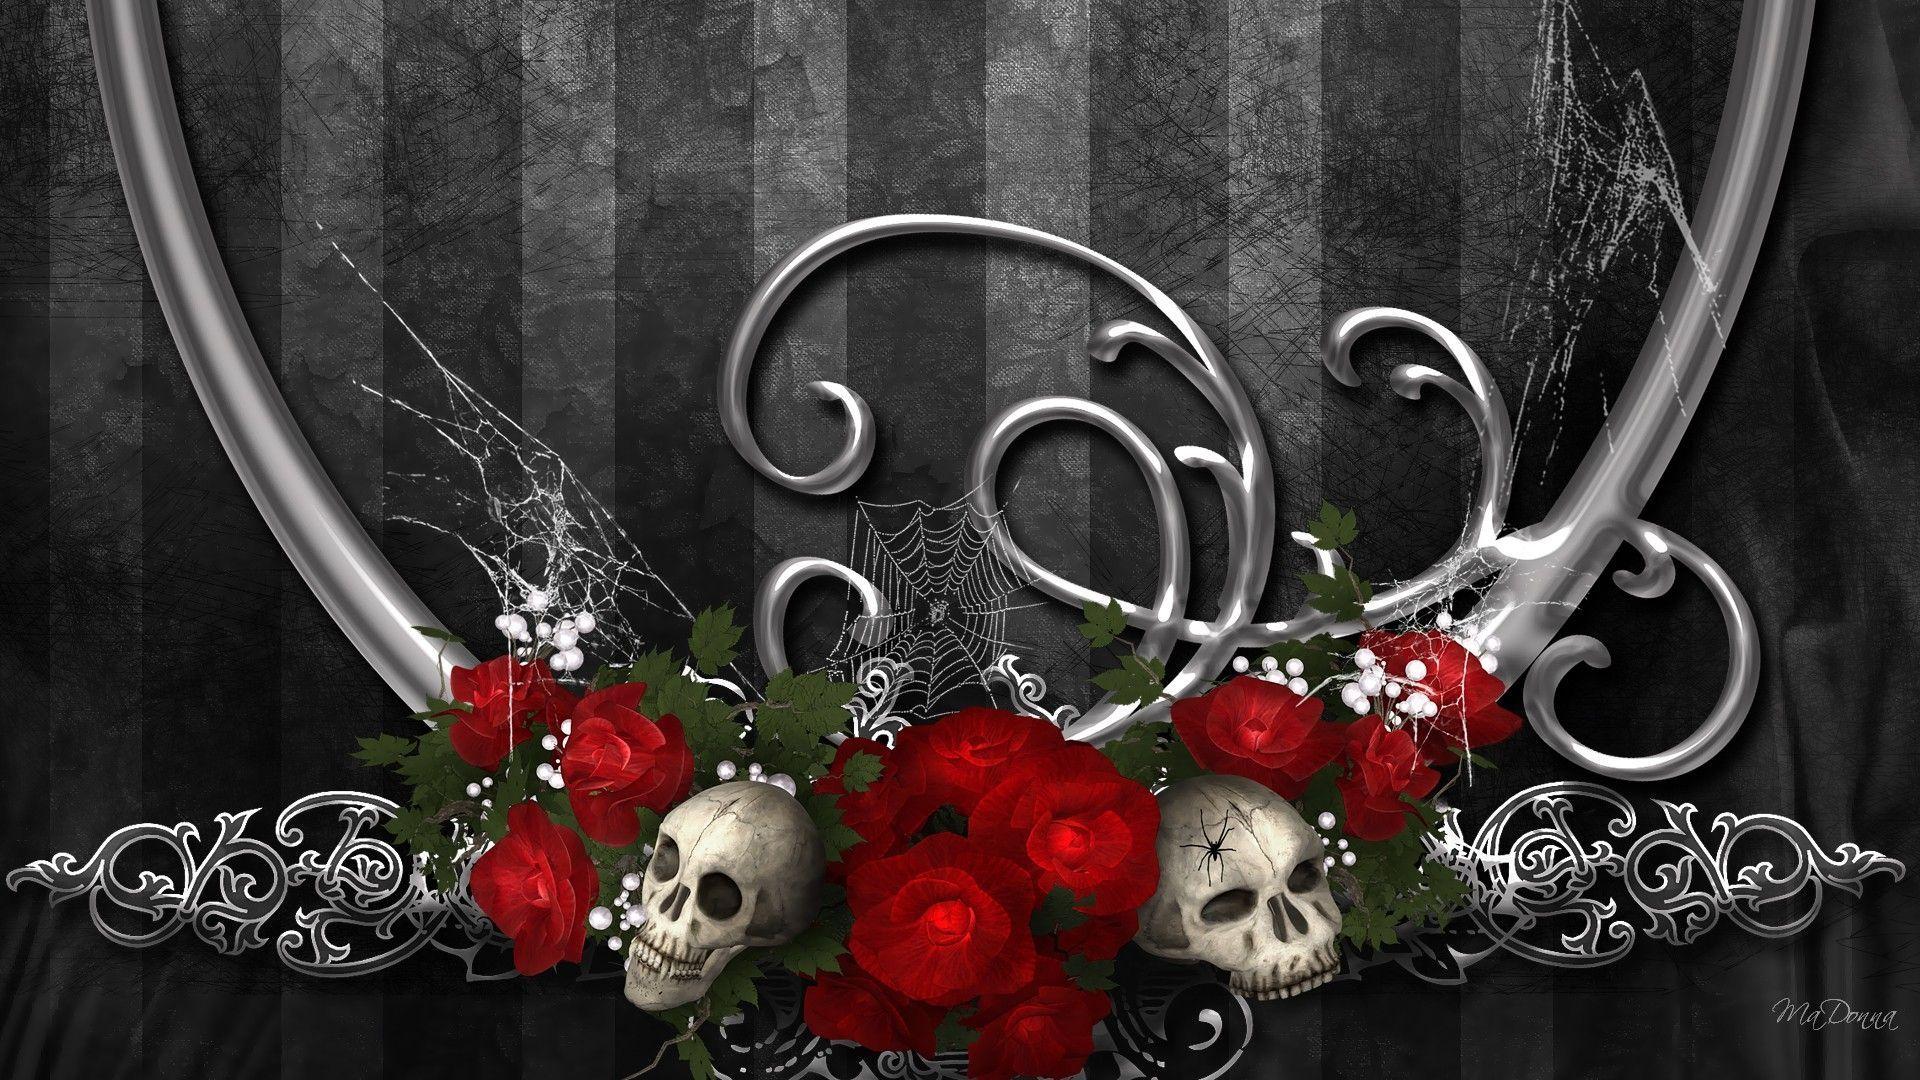 HD Roses Of Darkness Wallpaper. Download Free -79331. Skulls and roses, Gothic rose, Black roses wallpaper